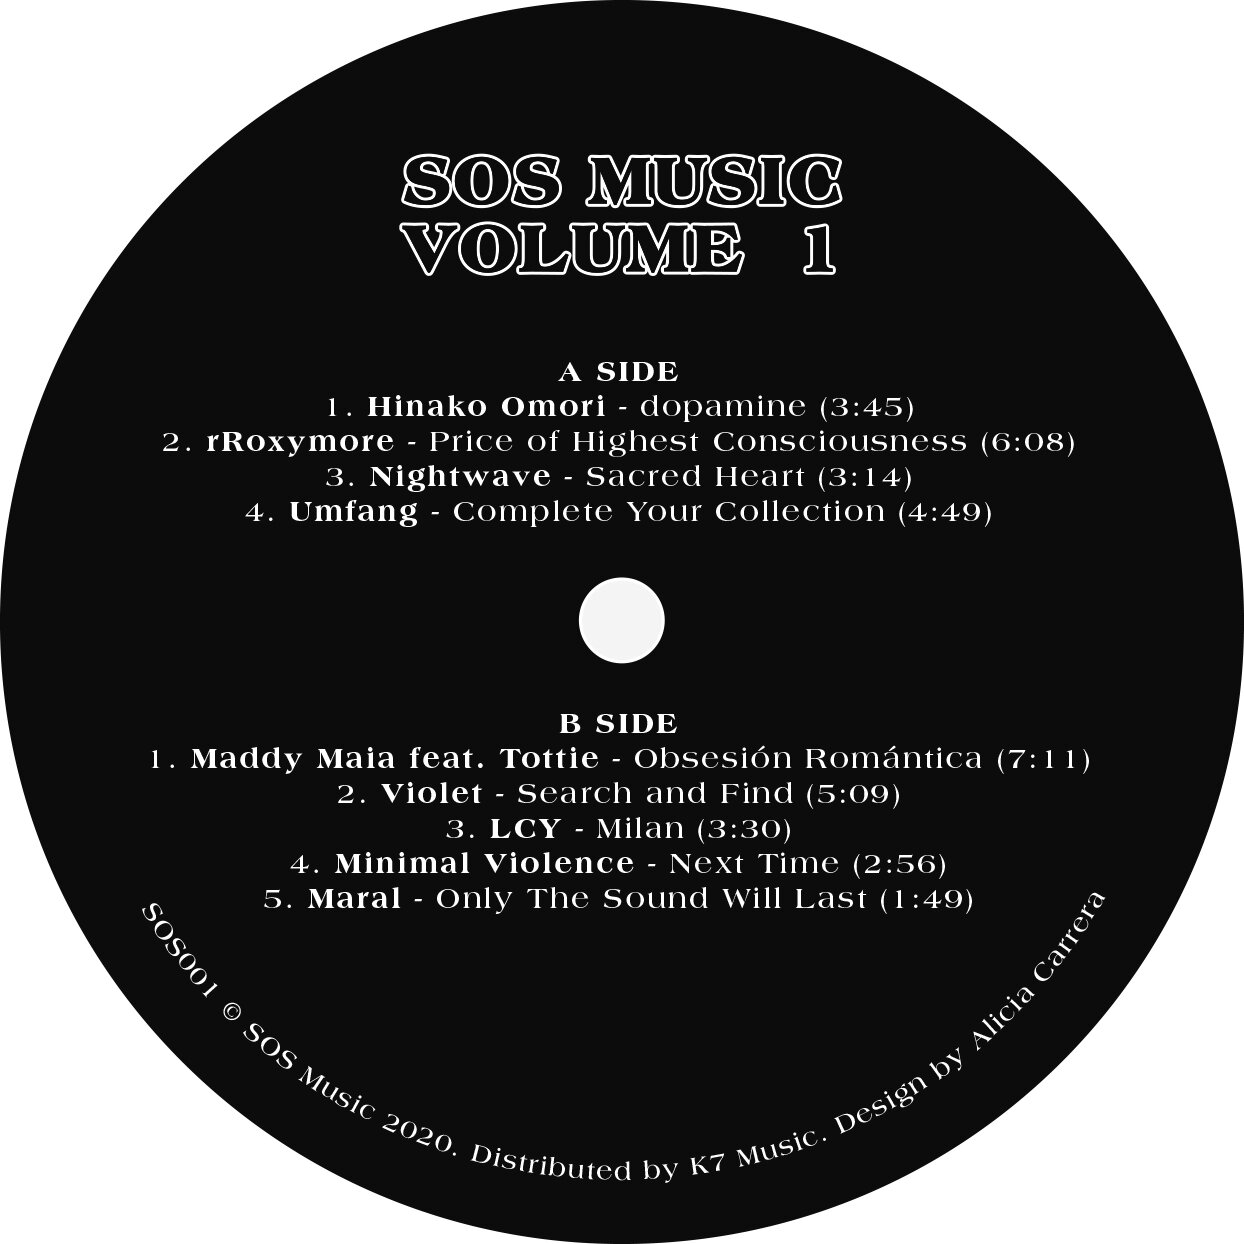 SOSMusicVol1 - label B.jpg